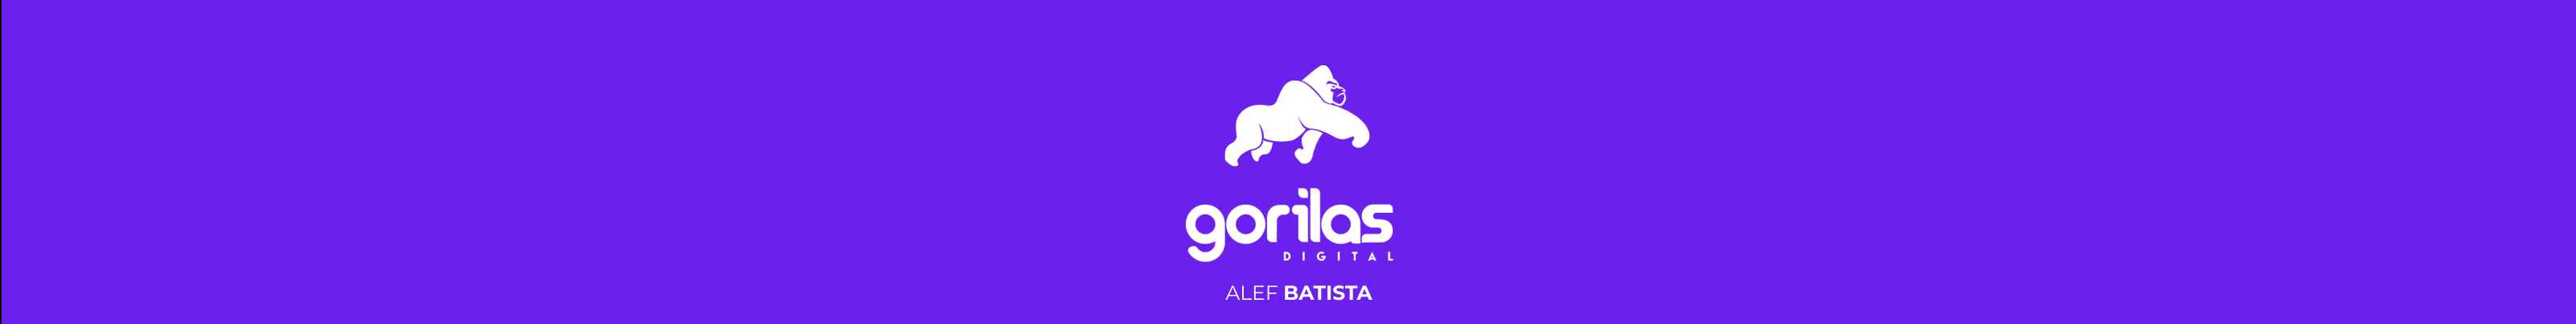 GORILAS Digital's profile banner